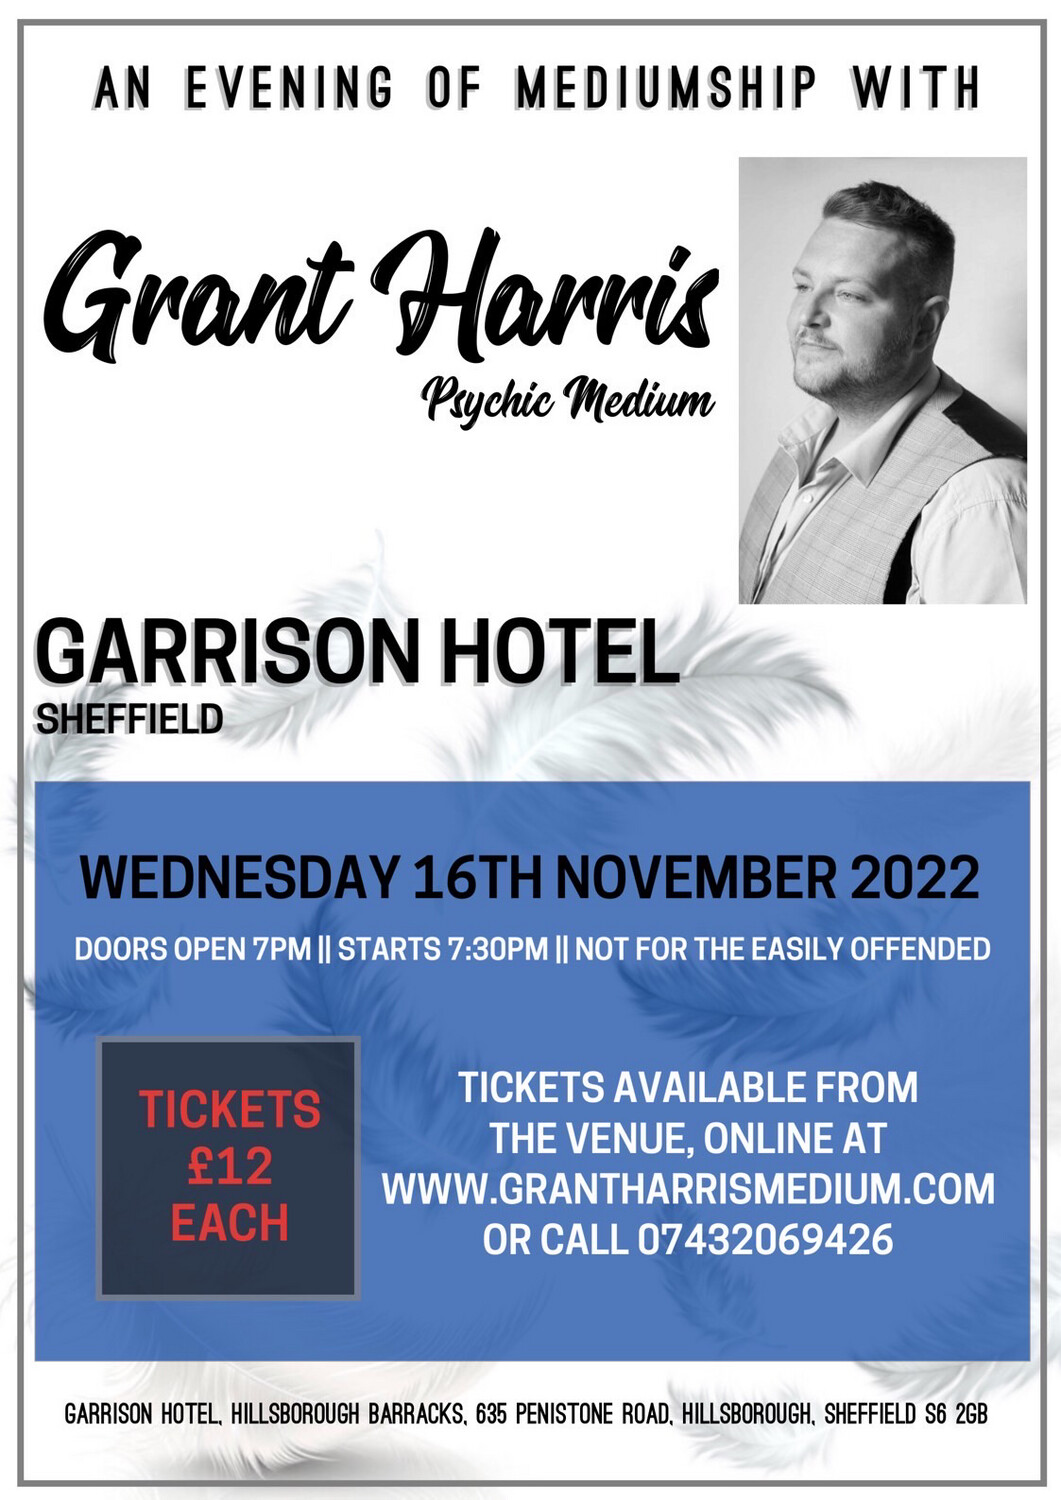 The Garrison Hotel, Sheffield, Wed 16th November 2022